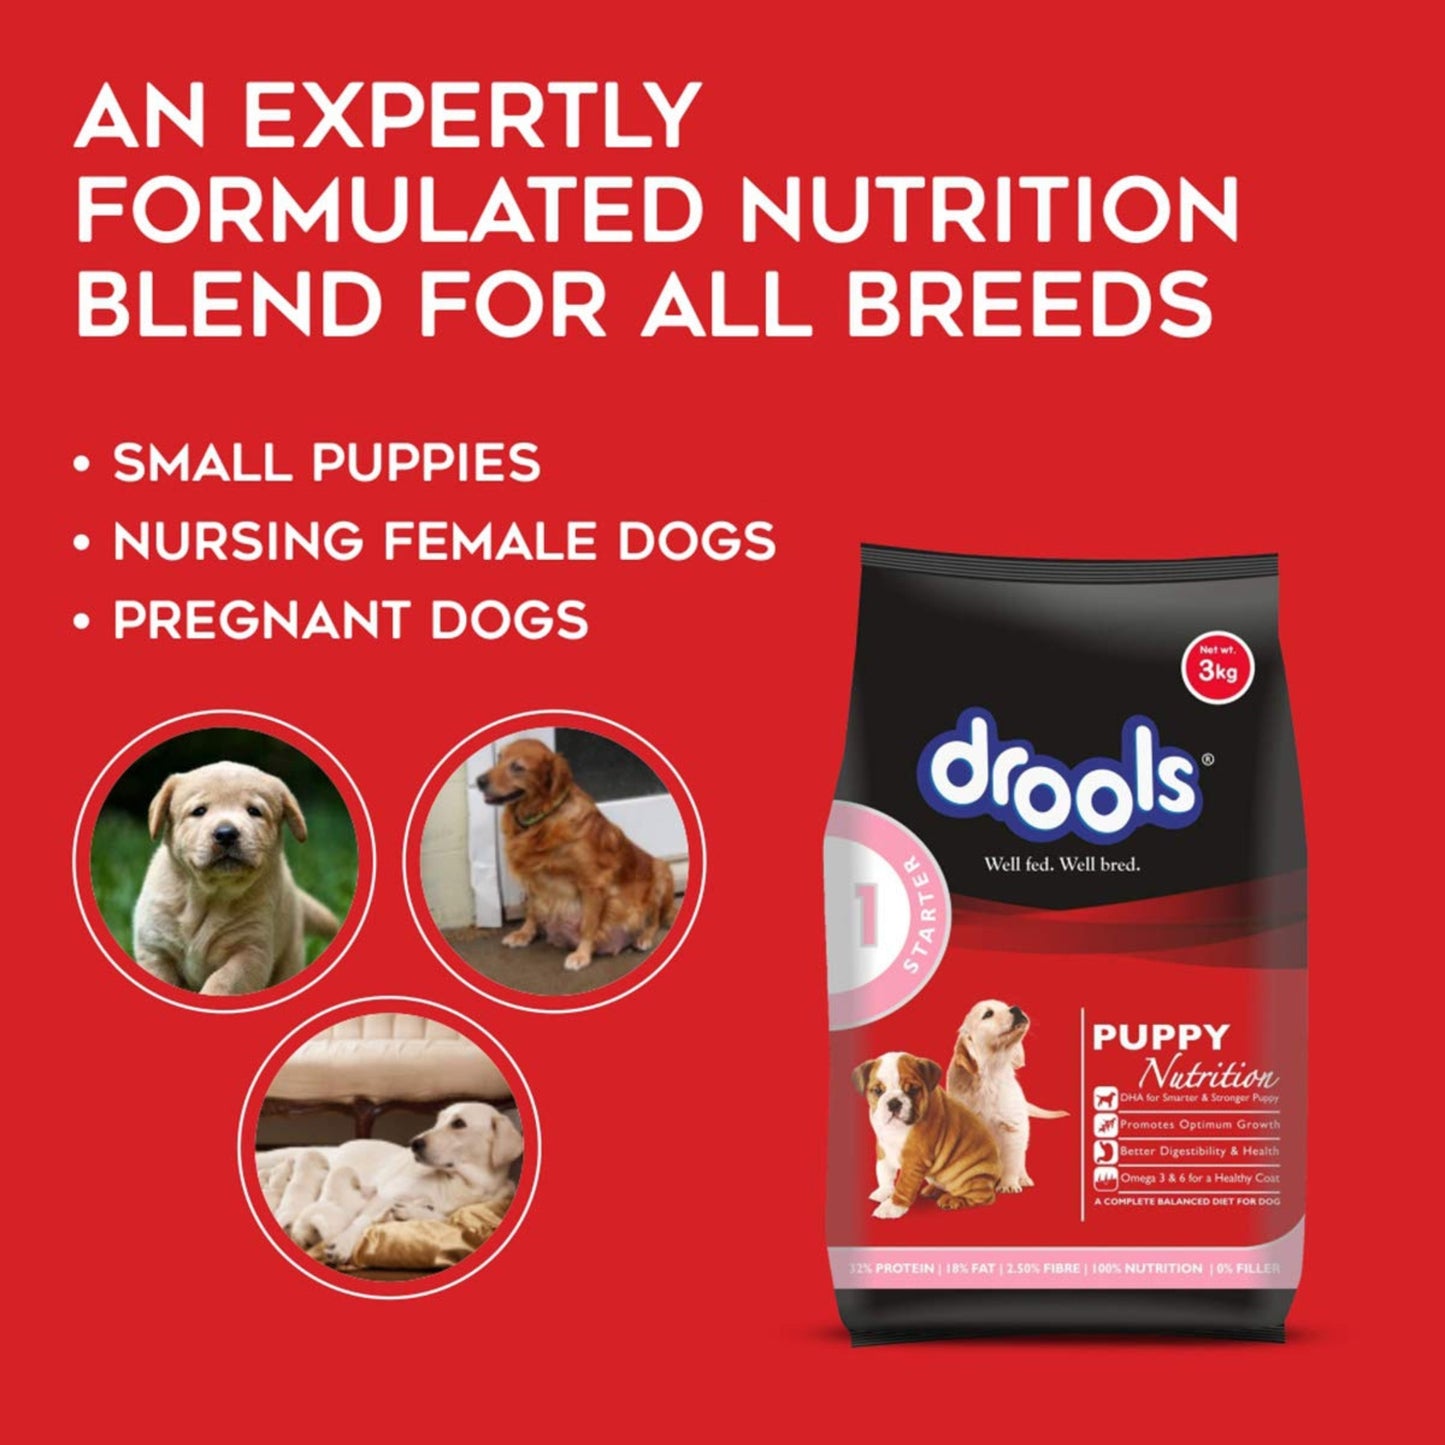 Drools Puppy Starter Dry Dog Food, Chicken Flavor, 3kg